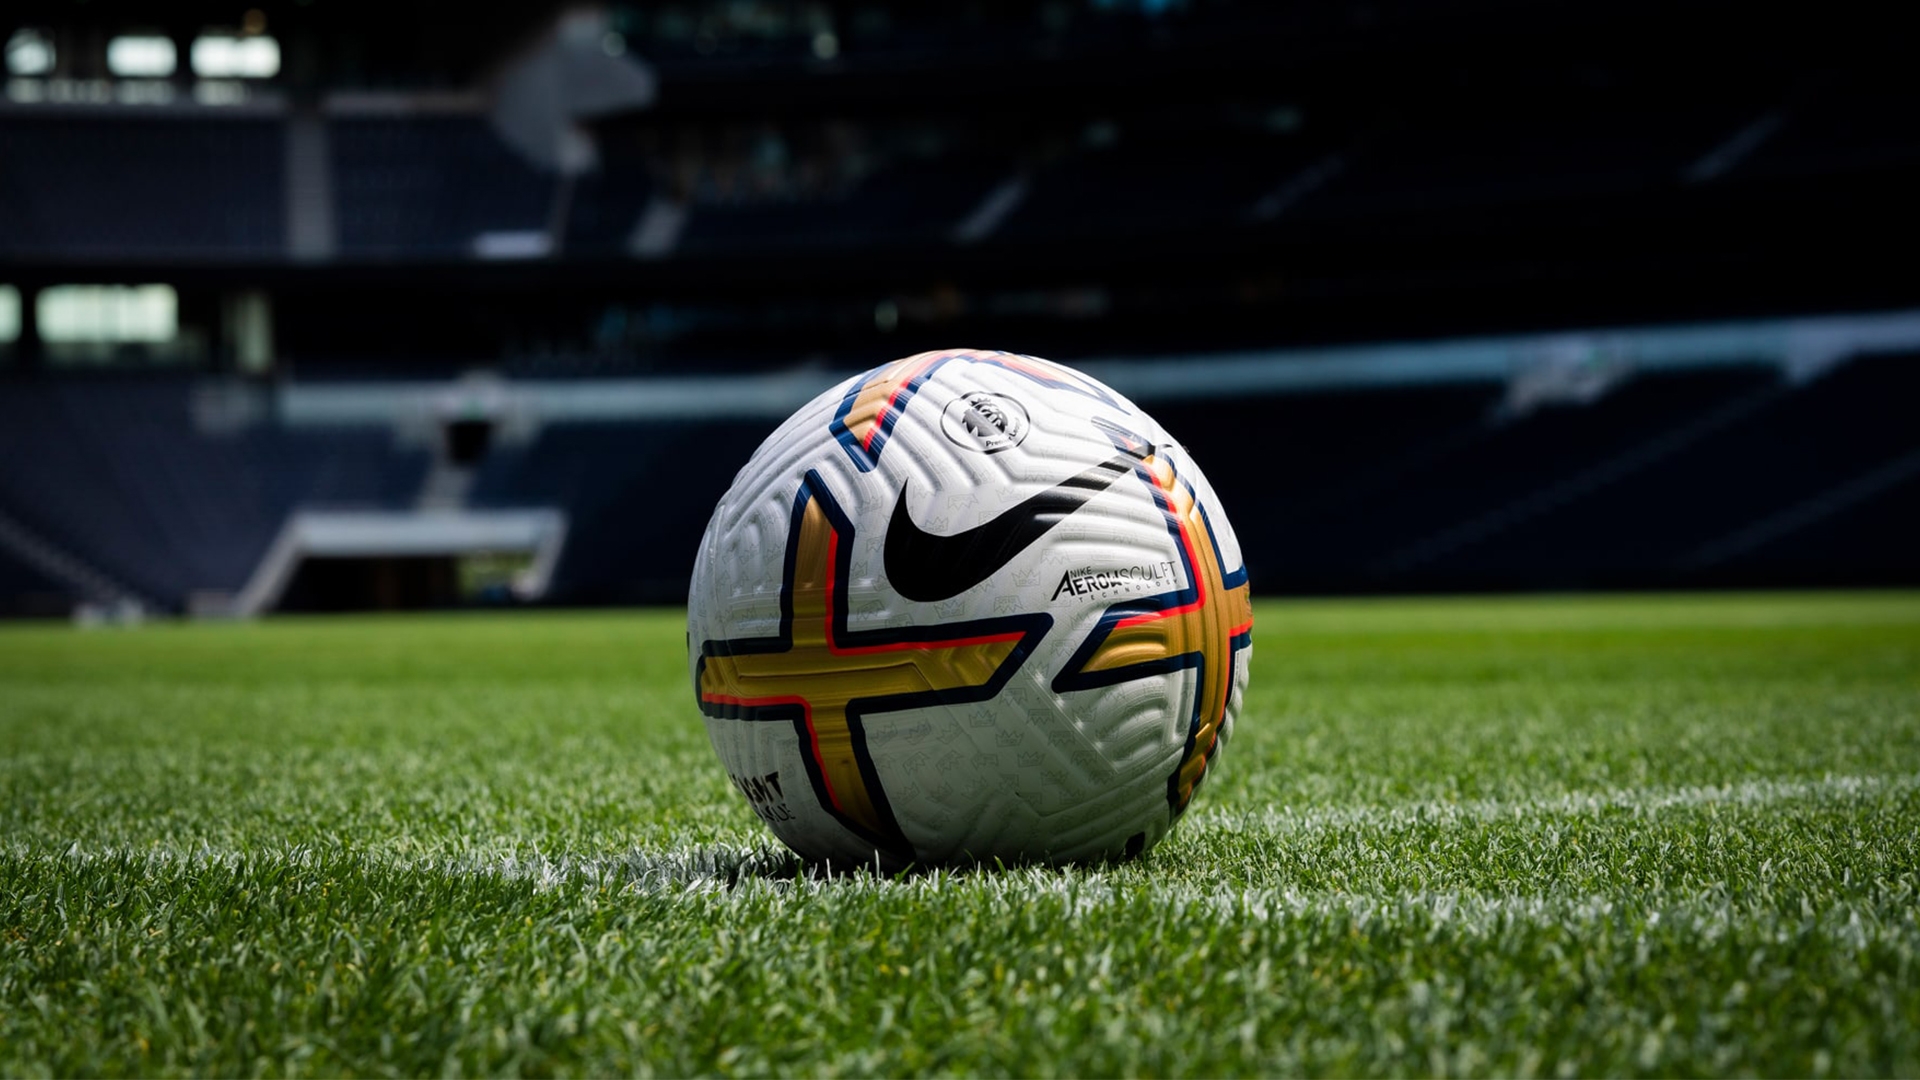 Nike Reveal New Premier League Match Ball For 2022 23 Season. Goal.com UK